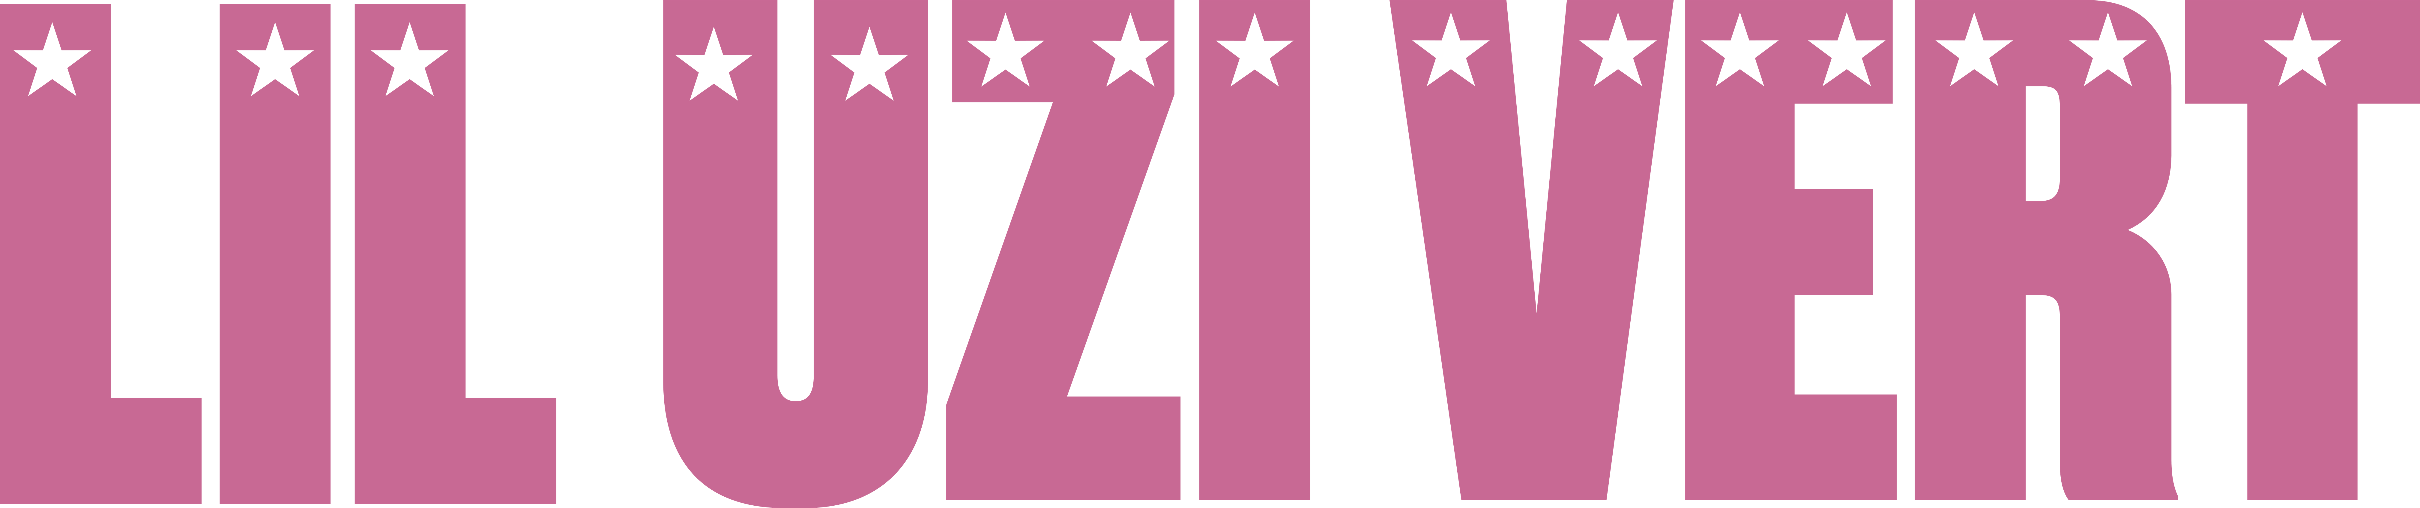 Lil Uzi Vert logo